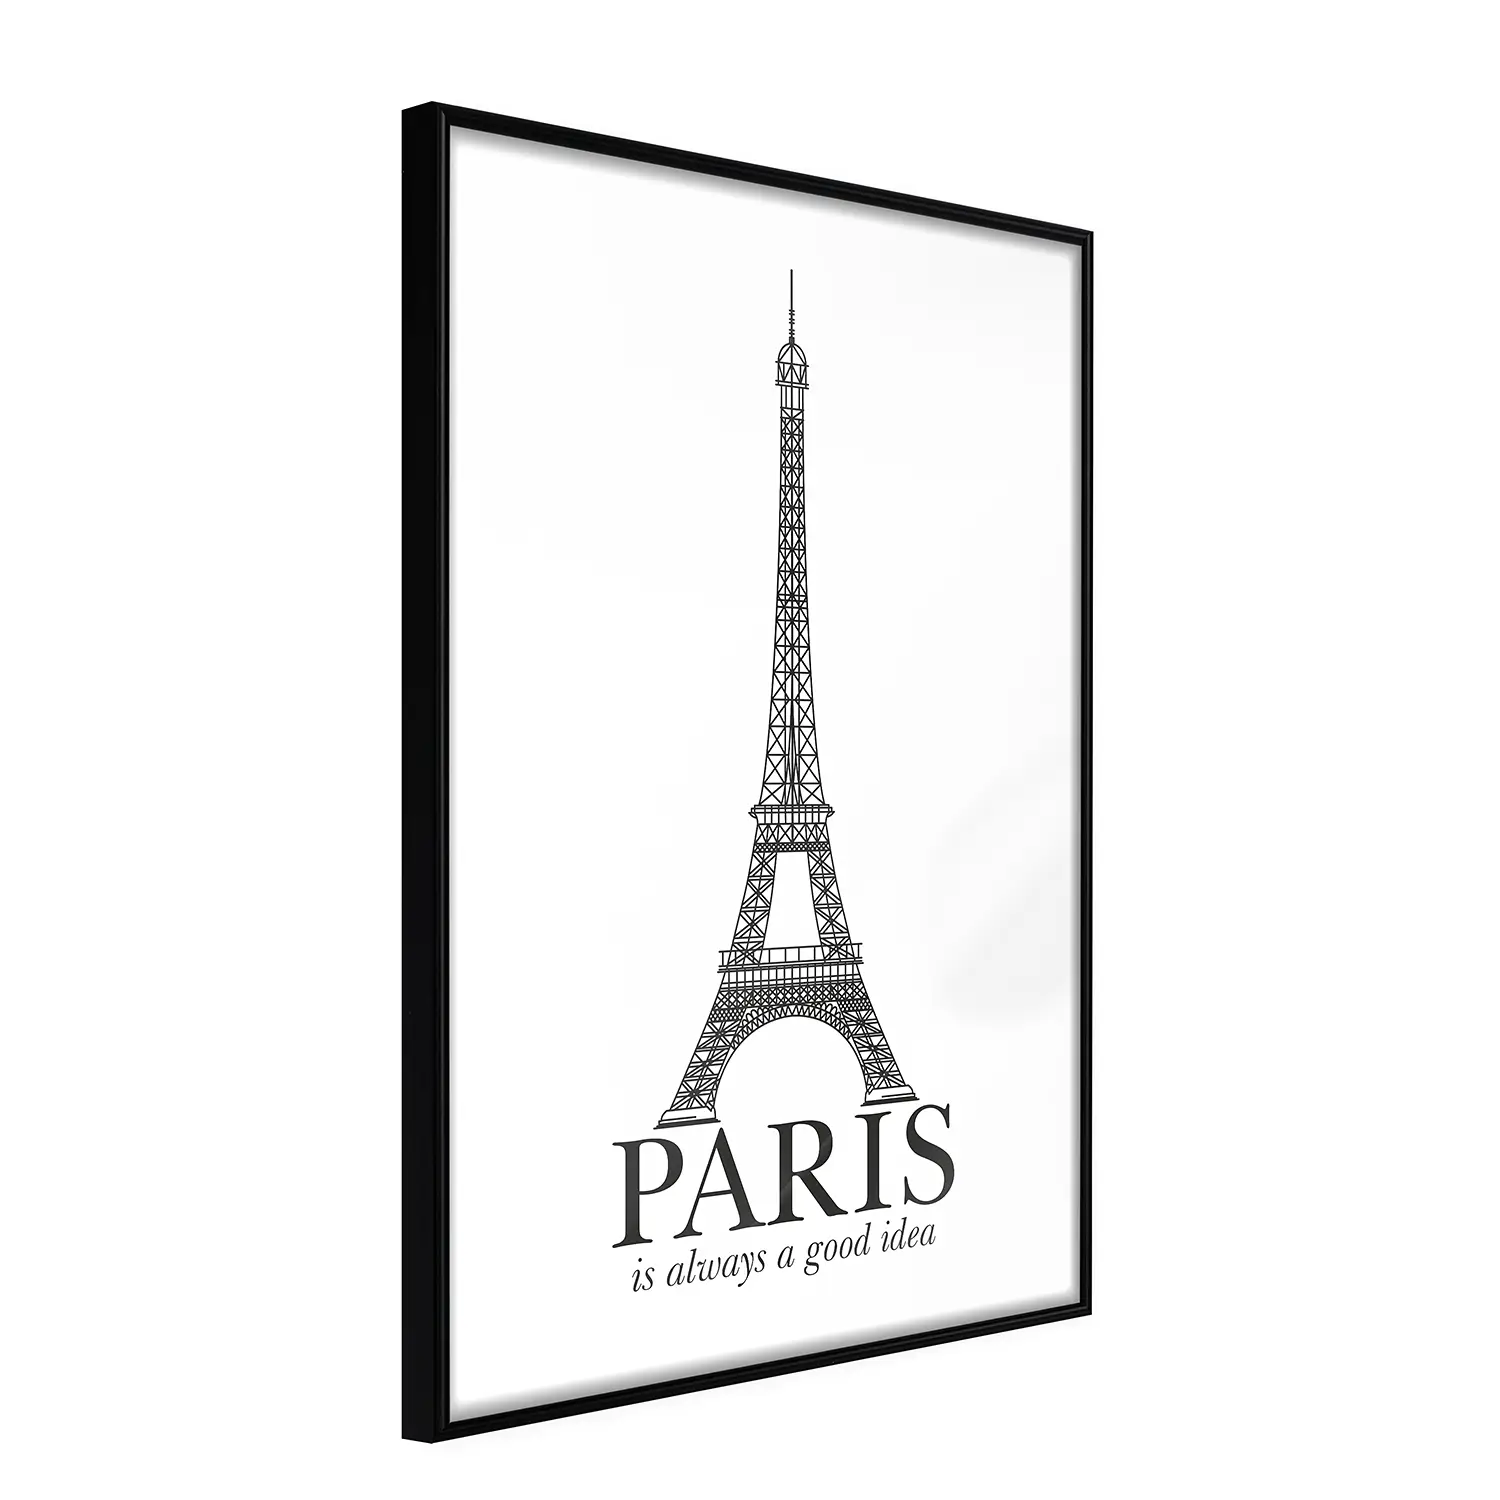 Paris Idea a Good Is Poster Always